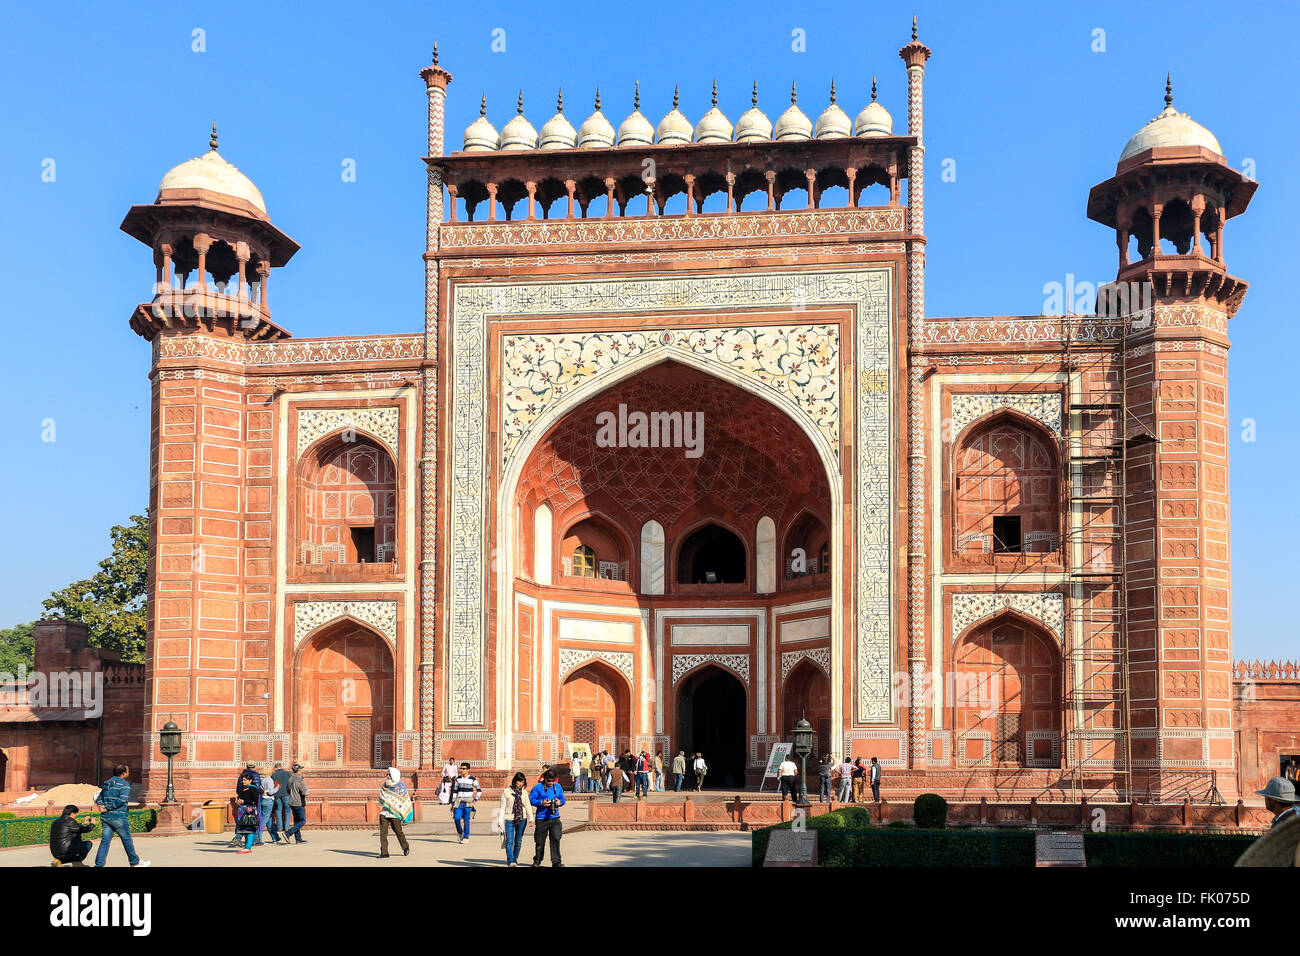 Red Fort in front of the Taj Mahal, UNESCO World Heritage Site, Agra,Uttar Pradesh, India, Asia Stock Photo